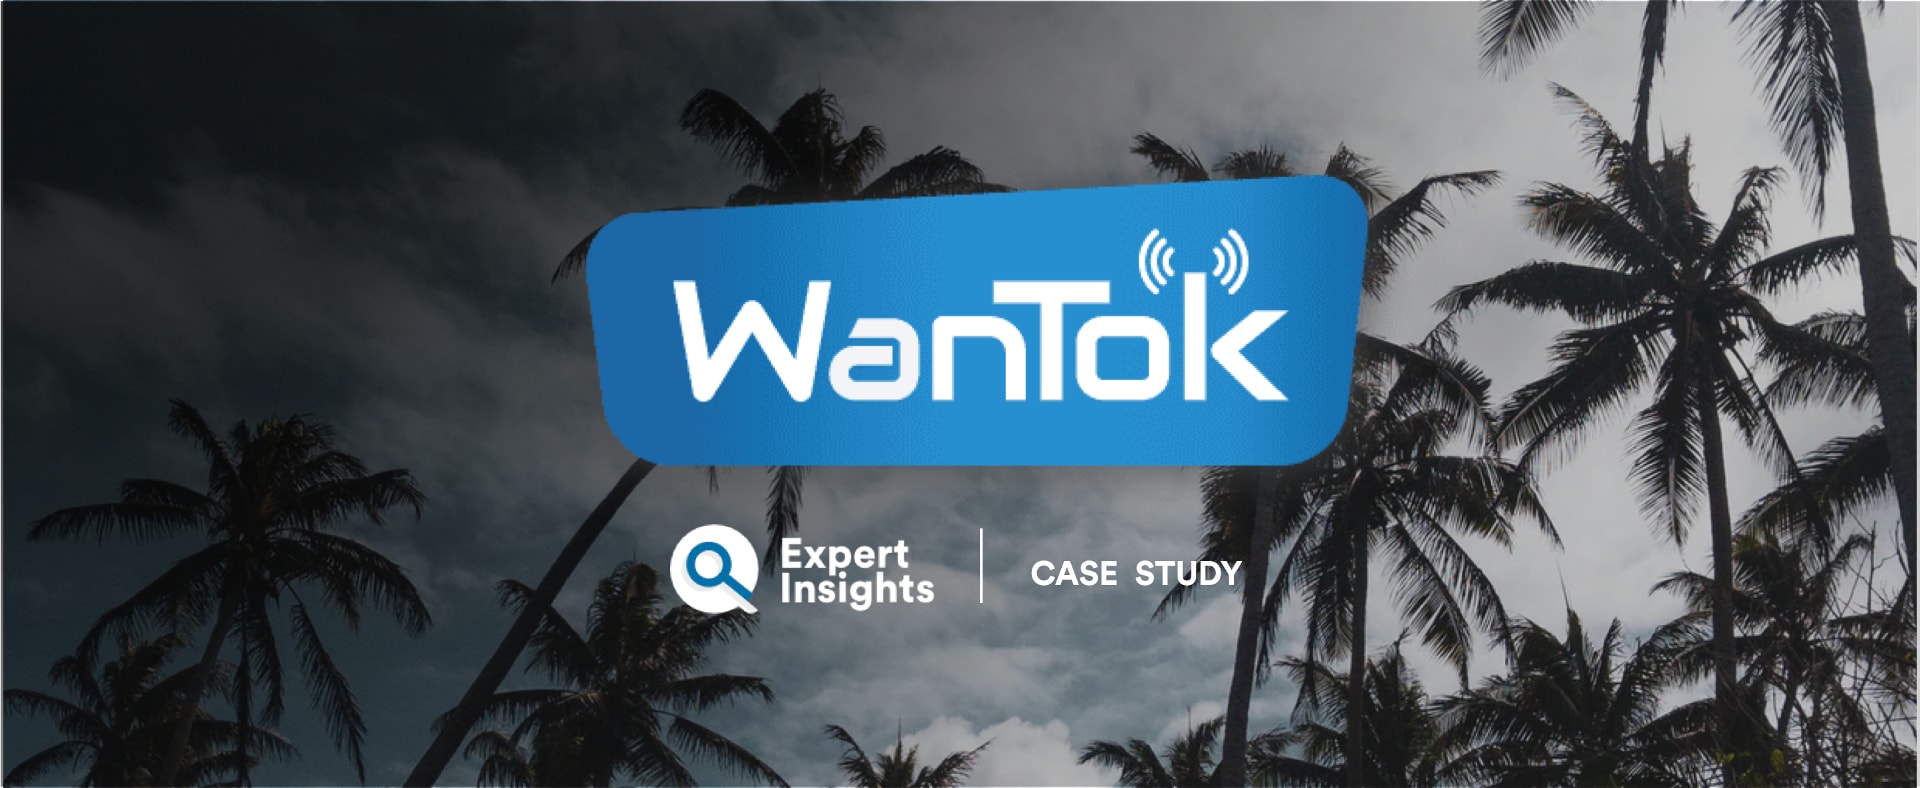 Wantok Expert Insights Case Study